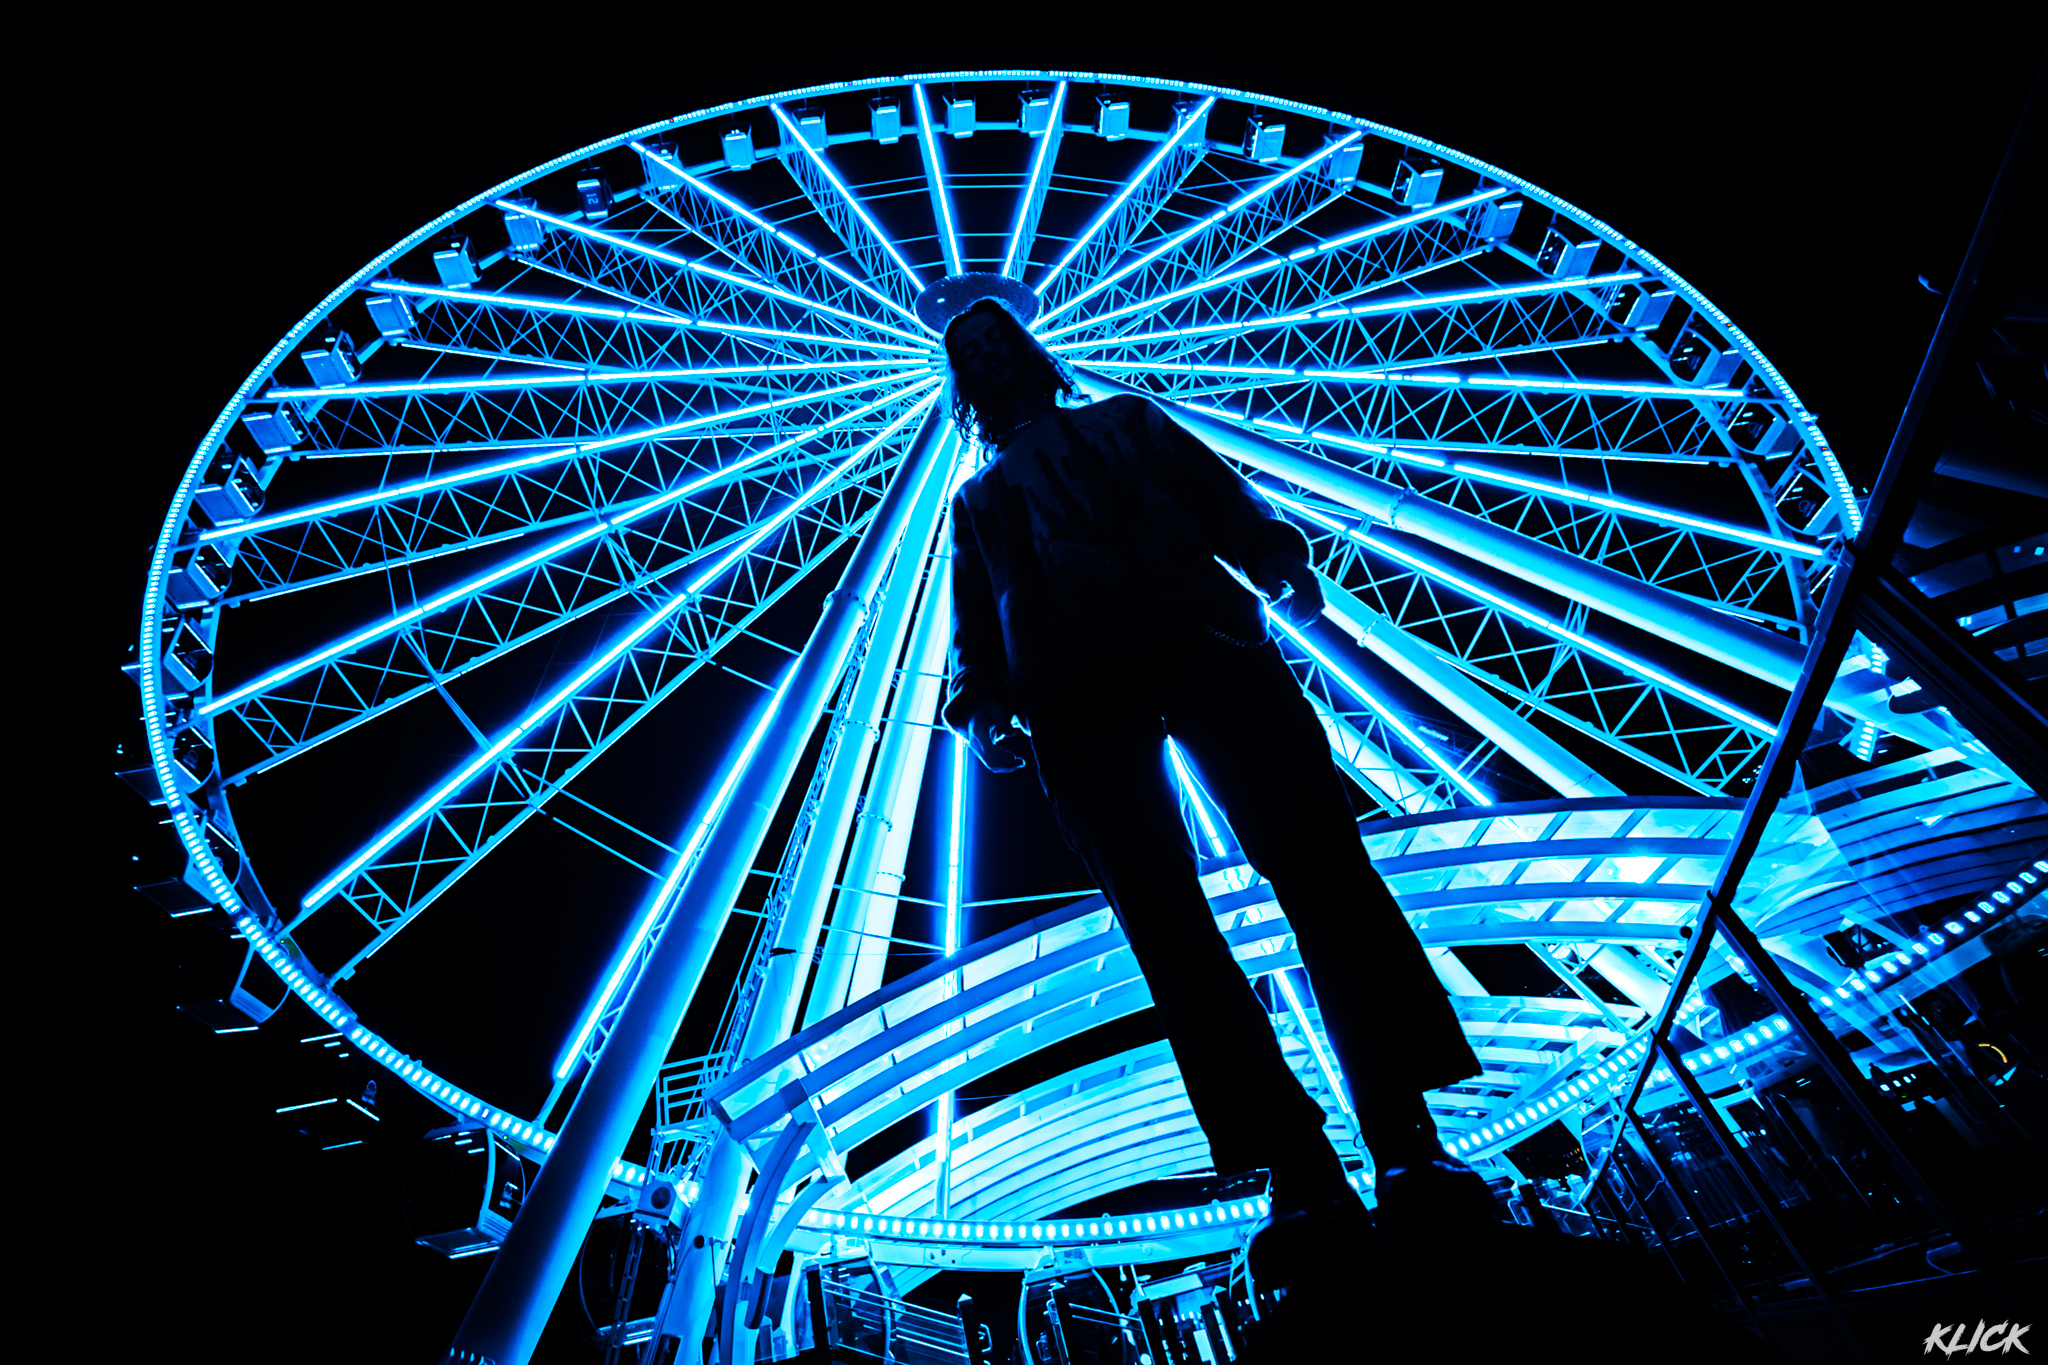 Meduso Press Shot: standing in front of blue farris wheel lit up